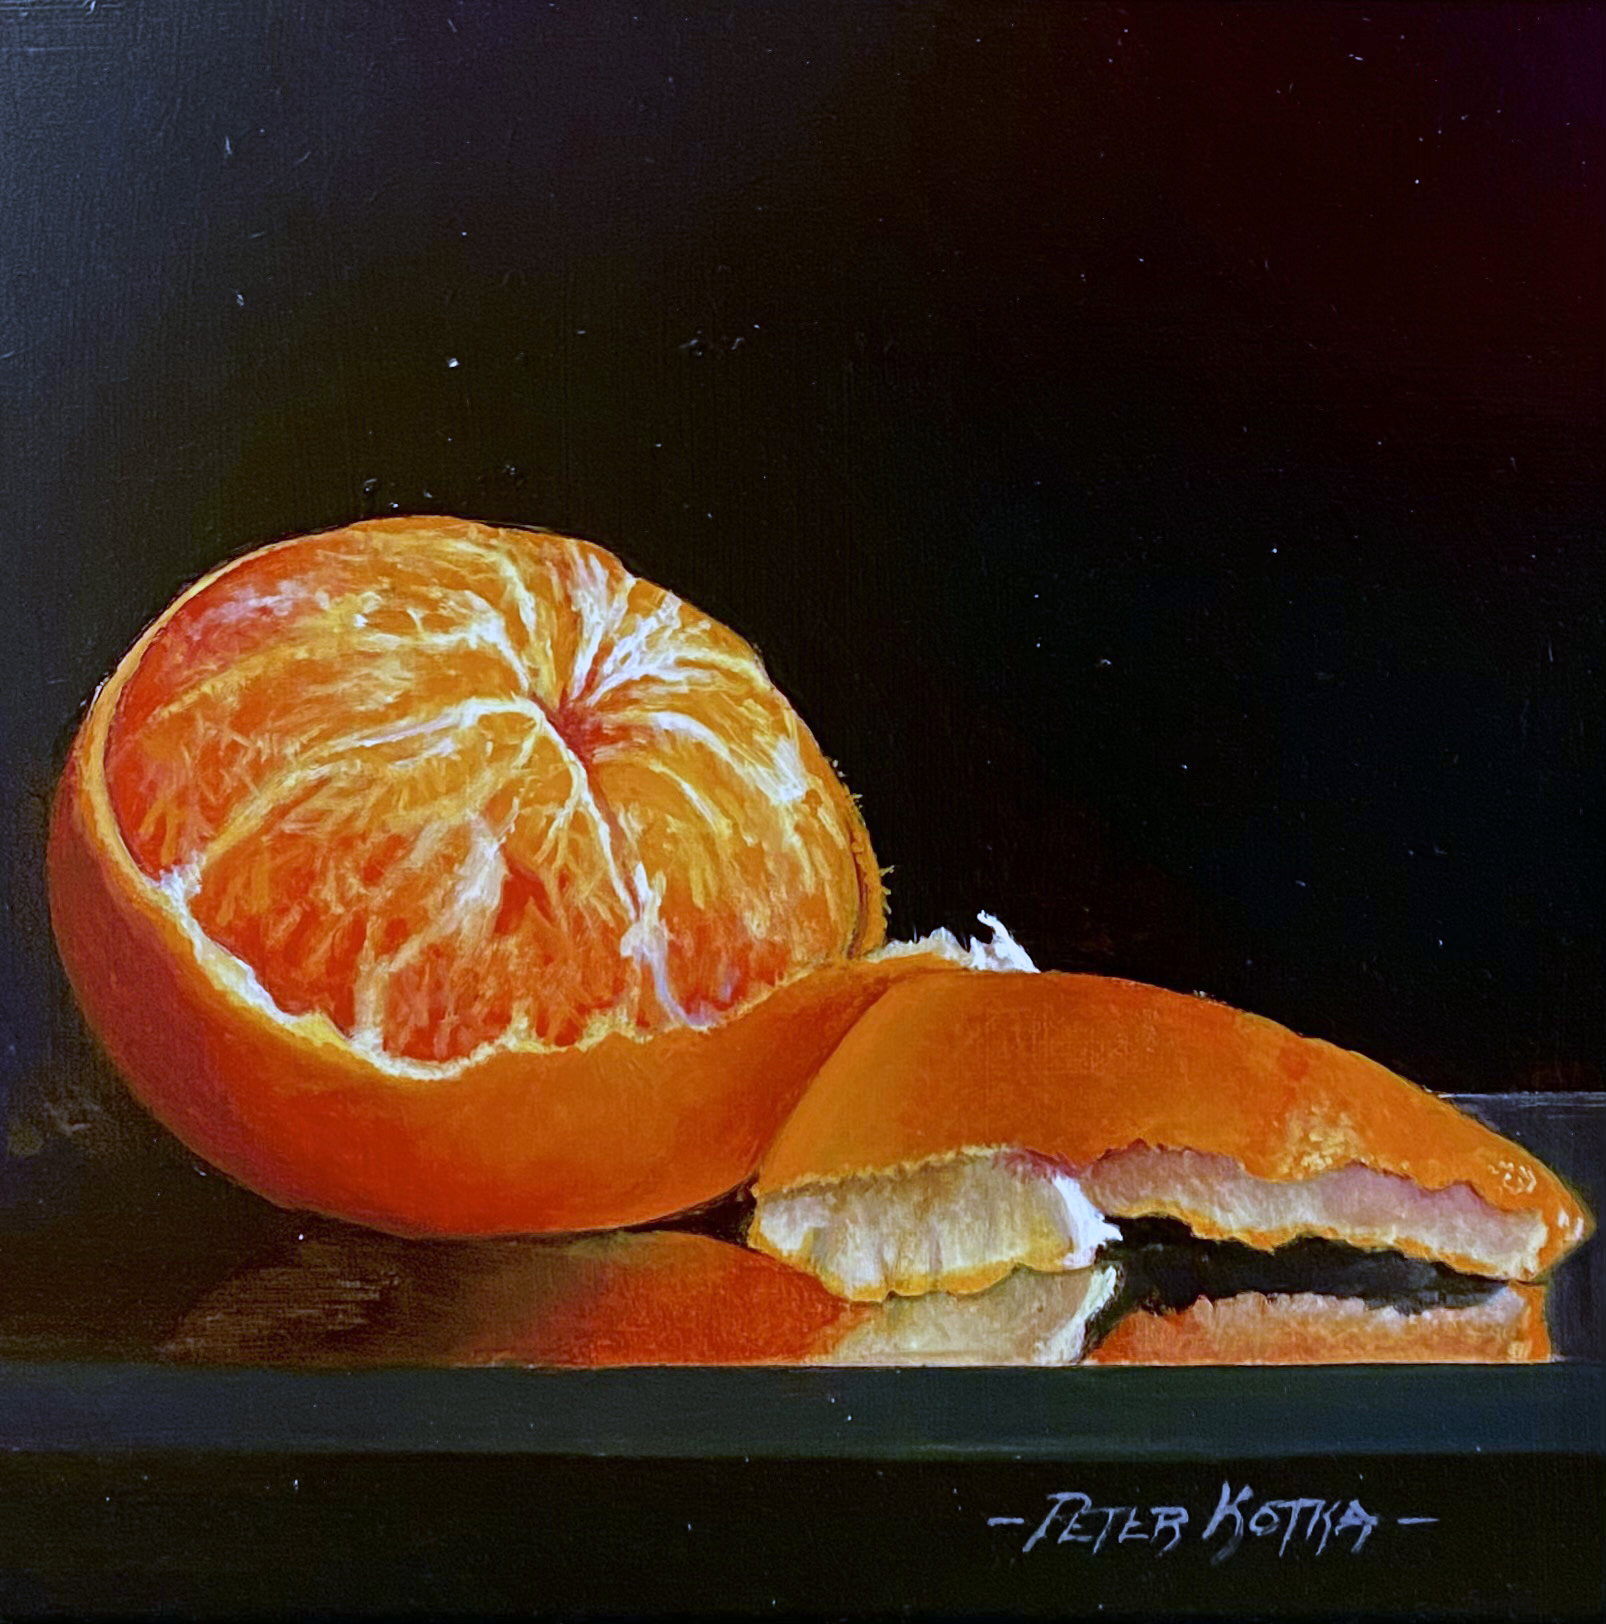 Orange Peel is an original oil painting on panel by the talented artist Peter Kotka